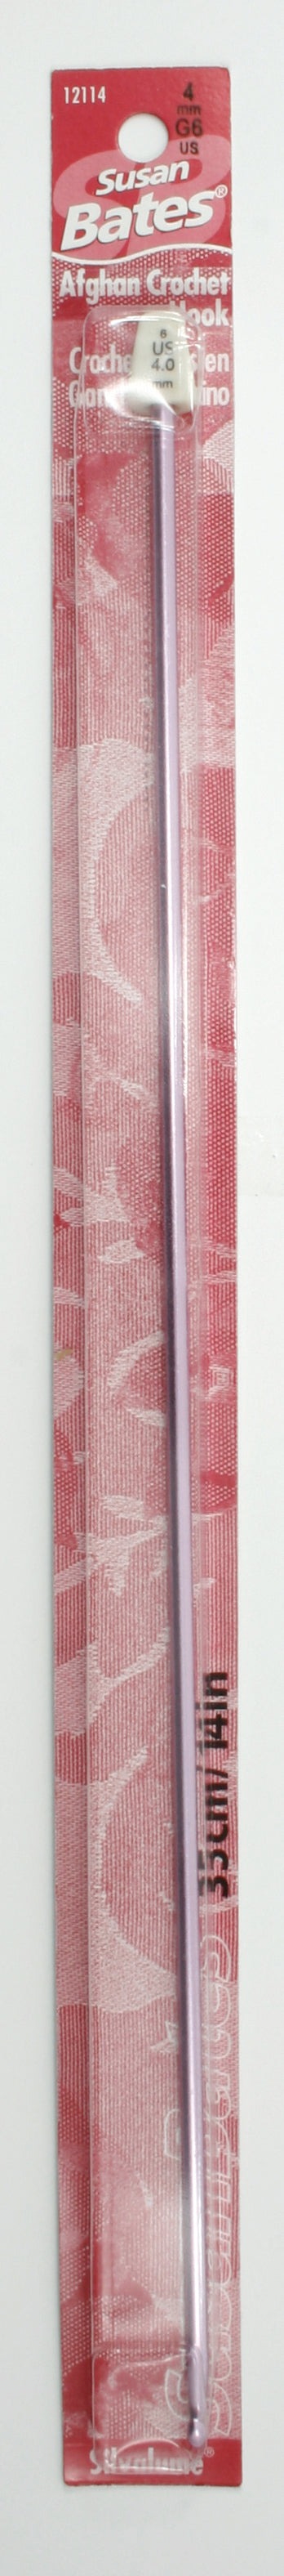 14" SB Silvalume Afghan Crochet Hook, 4mm, G-6